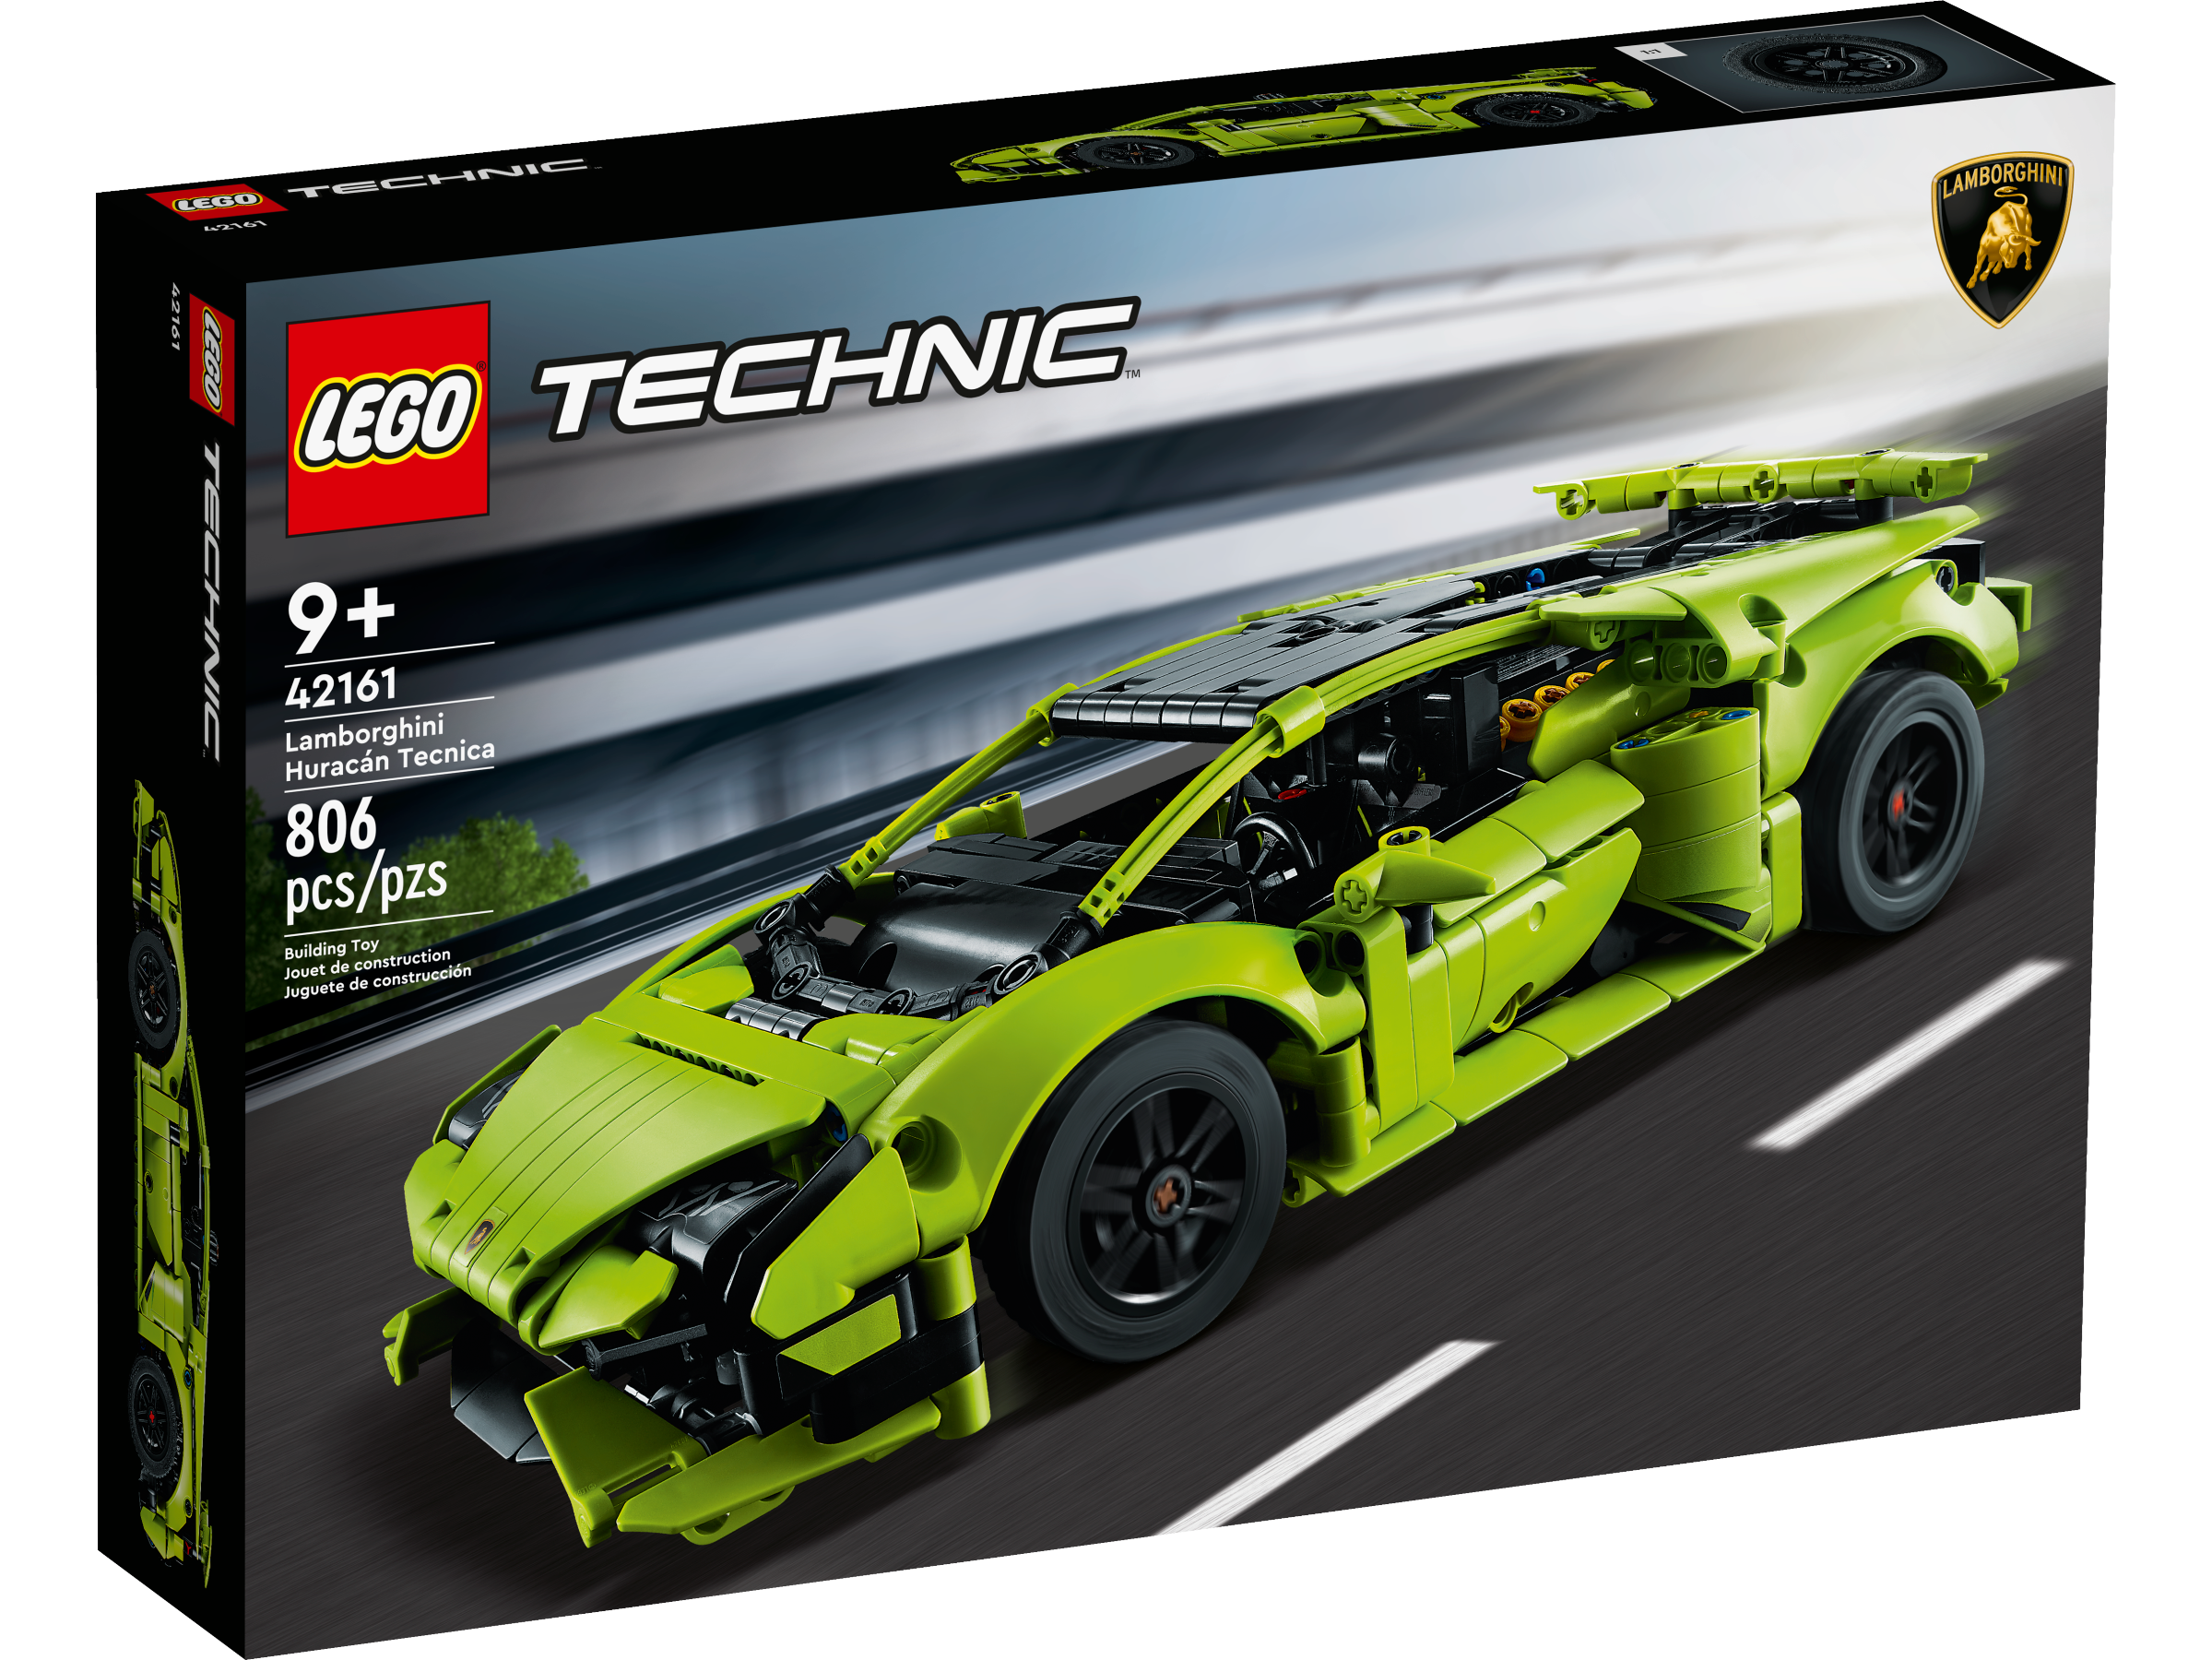 Lamborghini Huracán Tecnica 42161 Technic™ | Buy online at the Official LEGO® Shop